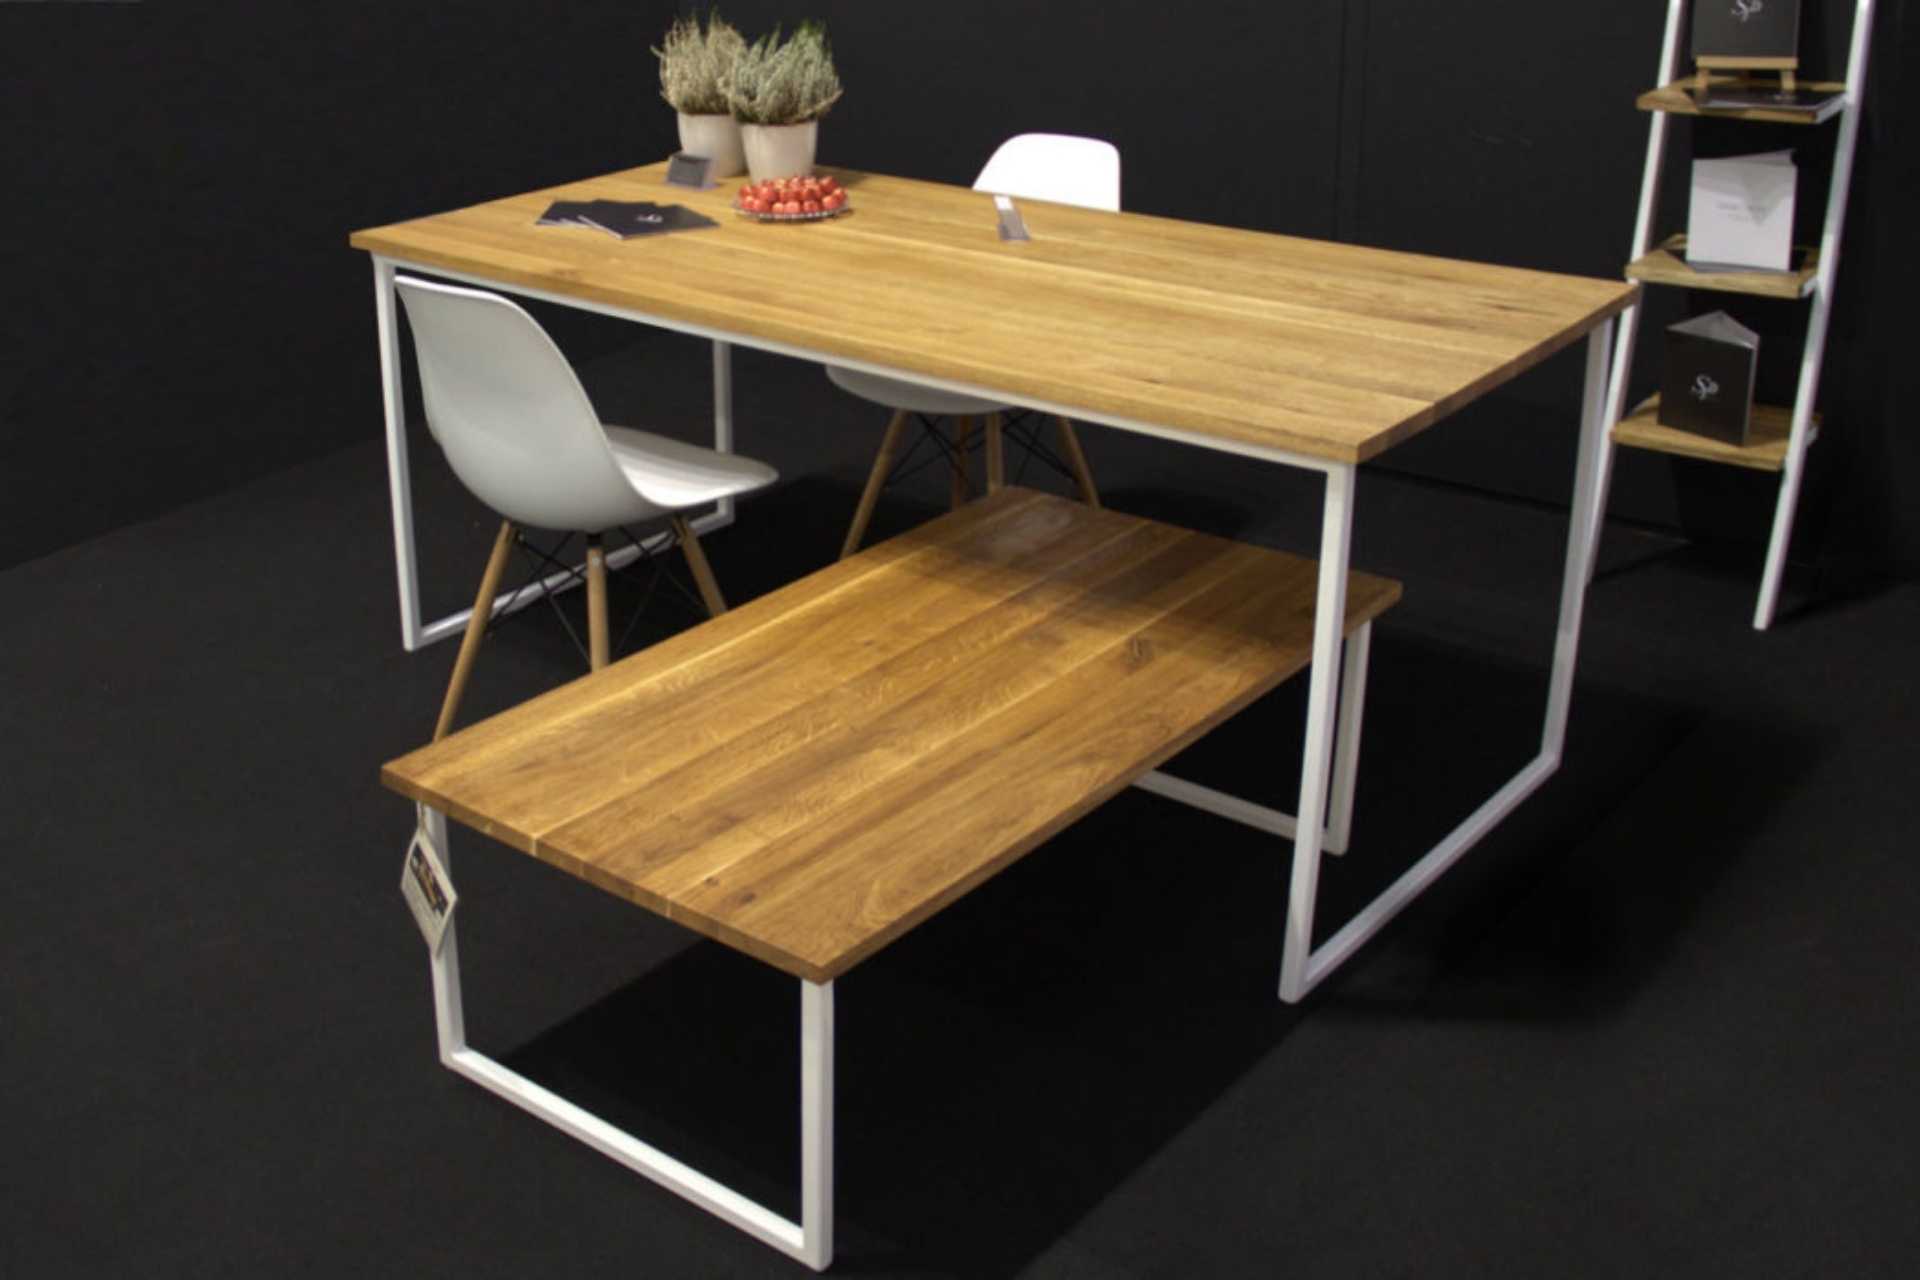 2_BASIC TVÅ Scandinavian coffee table_SFD Furniture Design